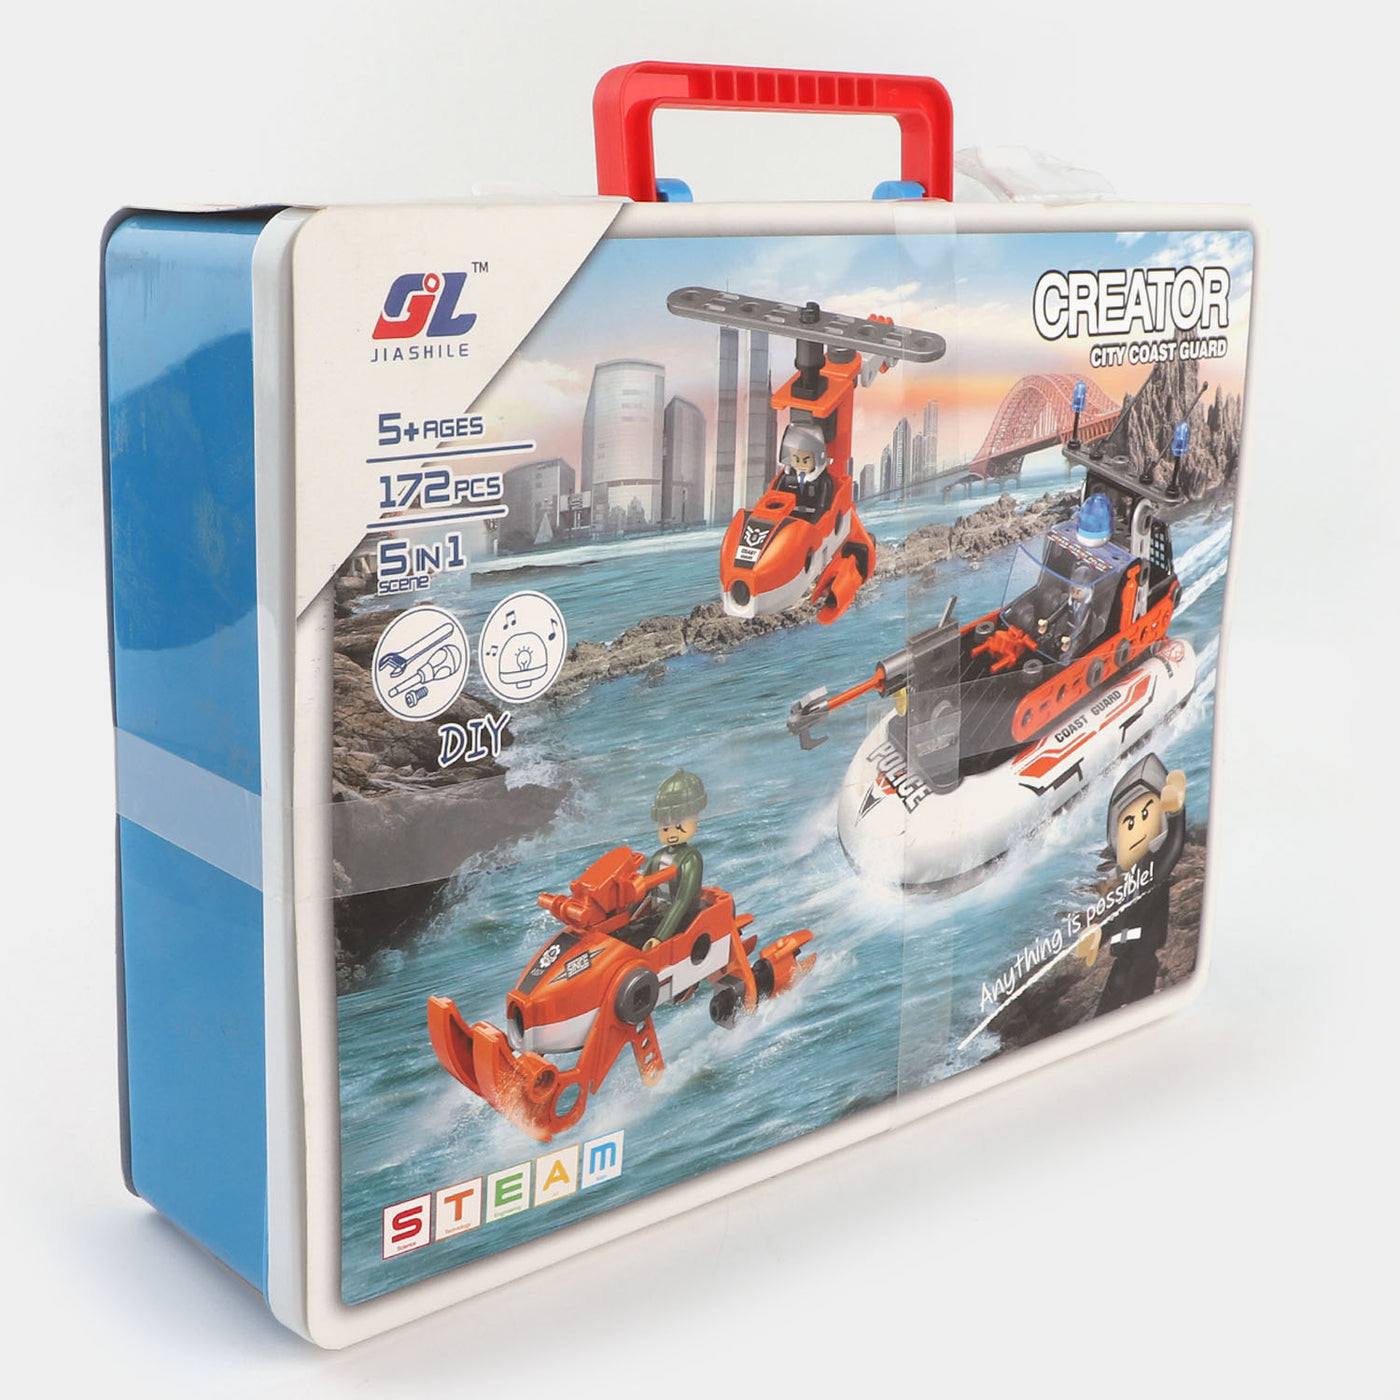 Creator Coast Guard Block Set | 172PCs